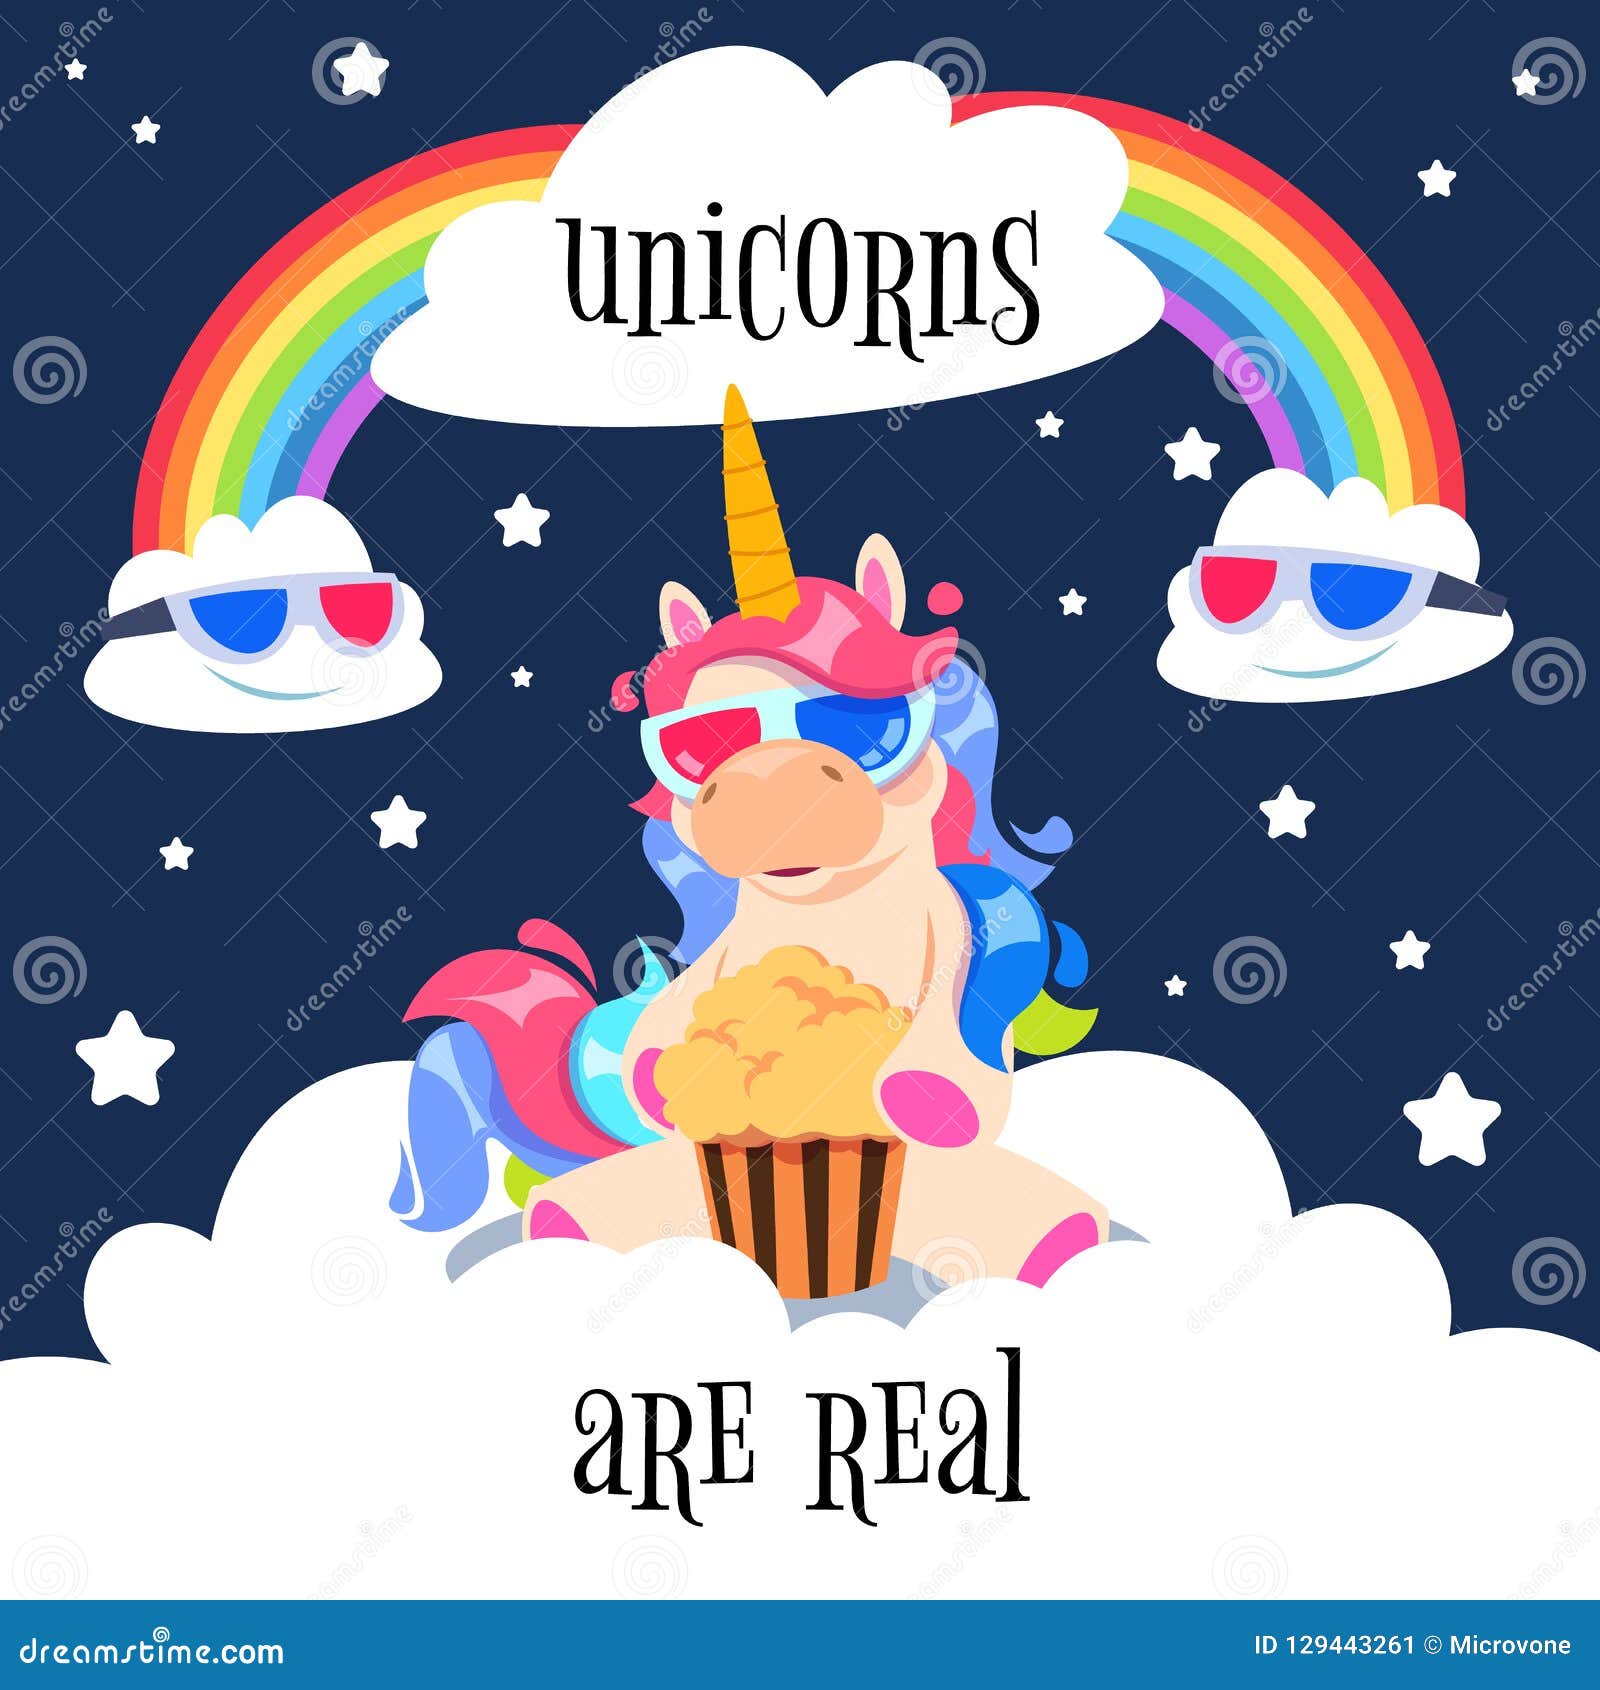 75914 Rainbow Unicorn Cute Images Stock Photos  Vectors  Shutterstock